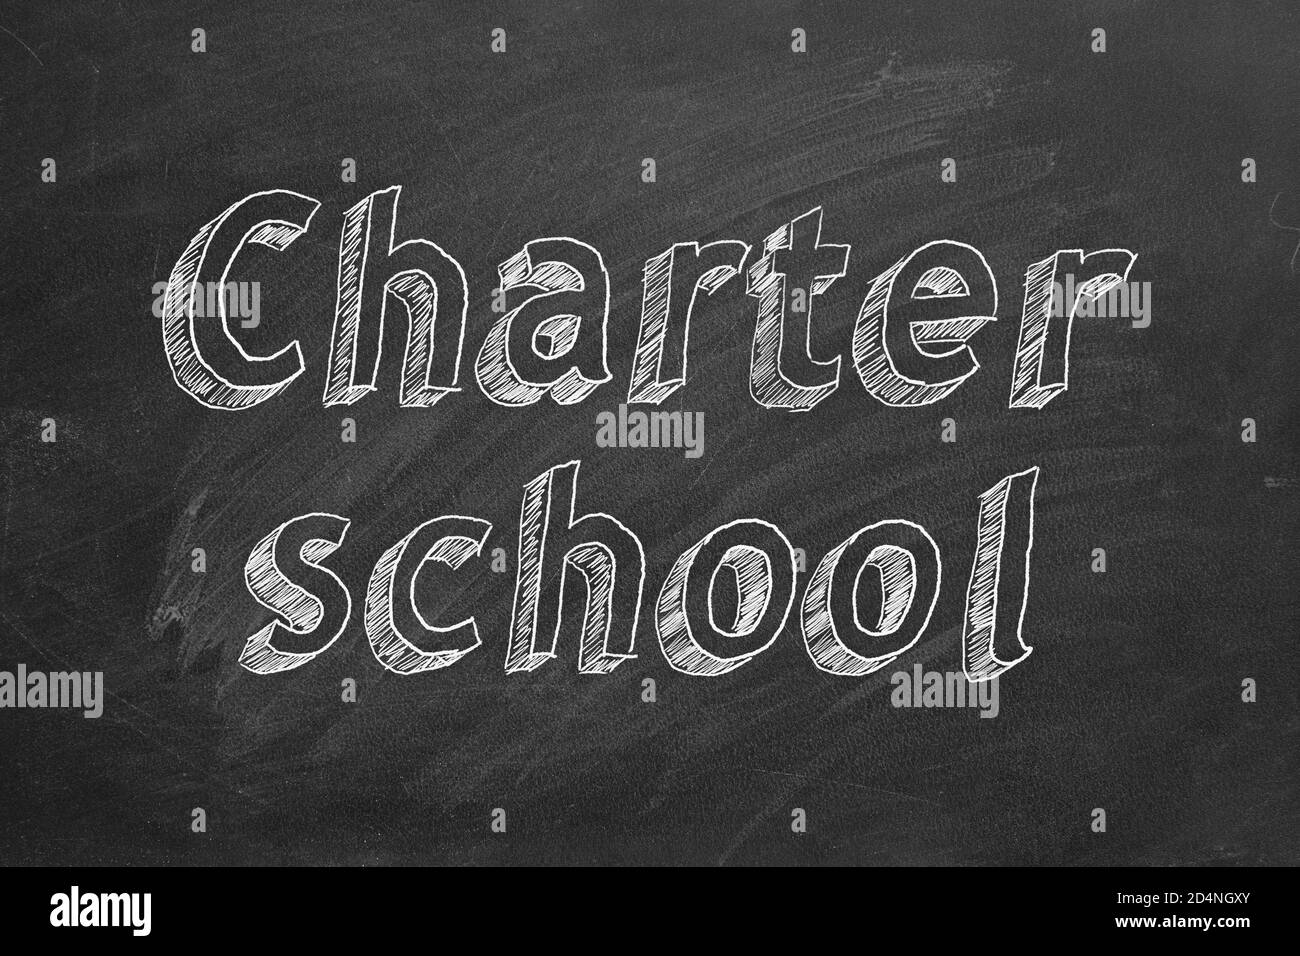 Hand drawing 'Charter school' on black chalkboard Stock Photo